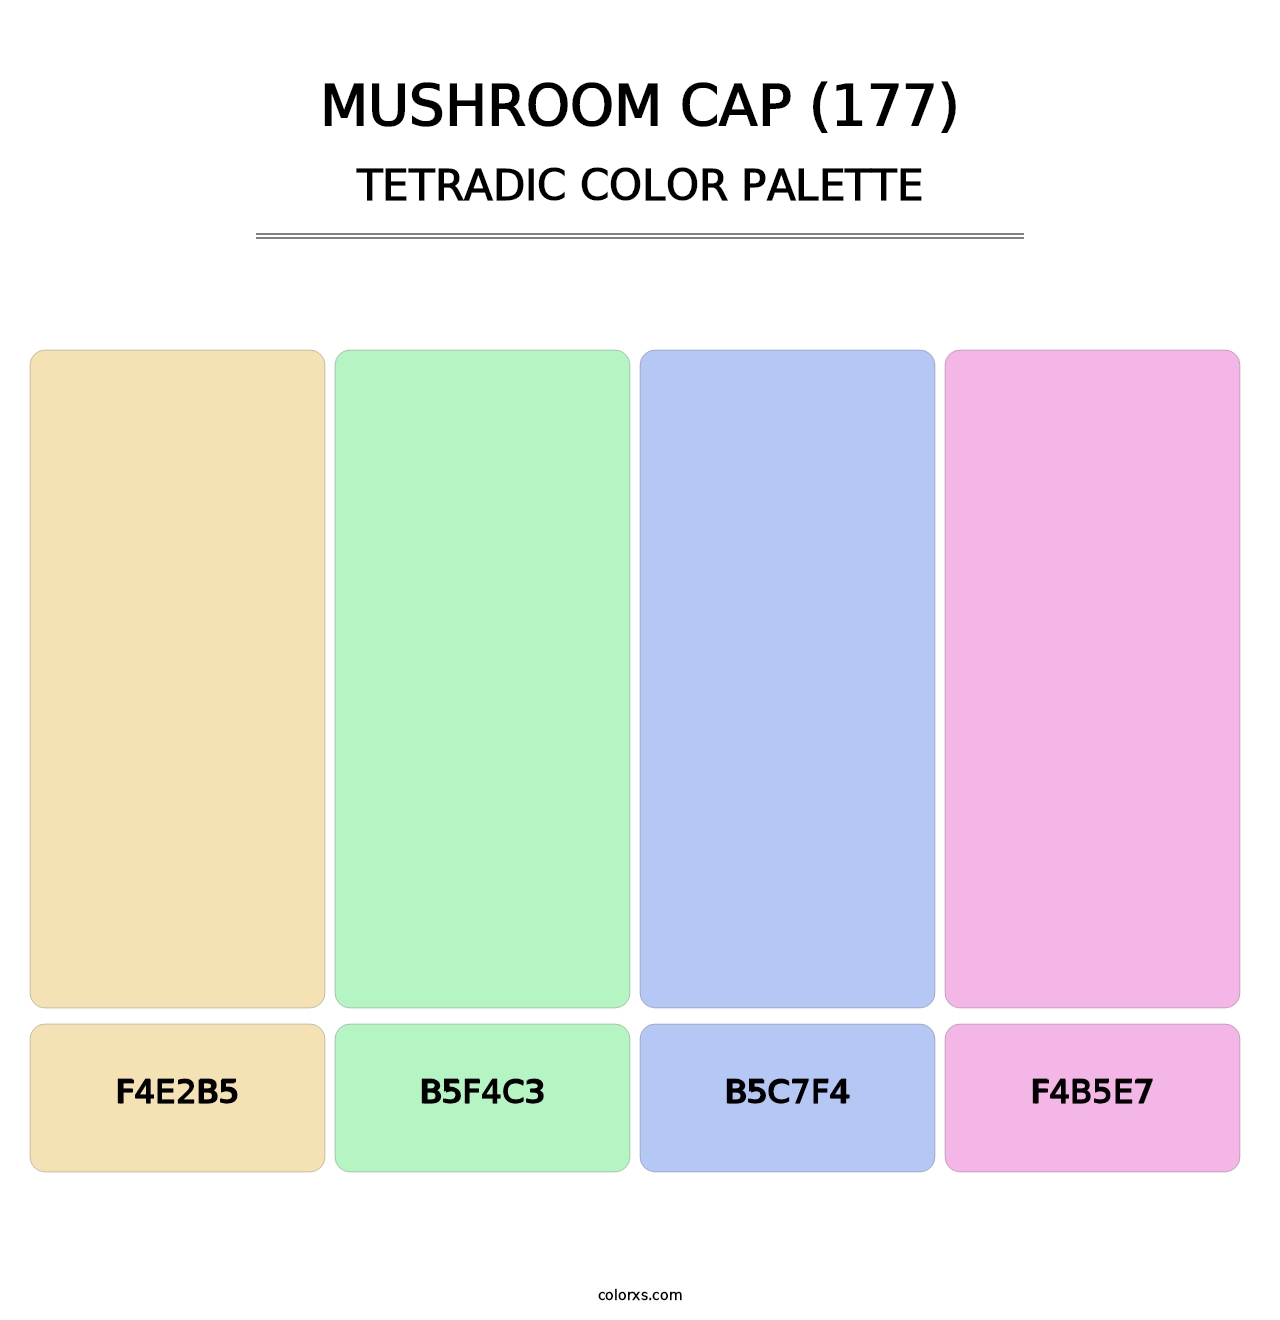 Mushroom Cap (177) - Tetradic Color Palette